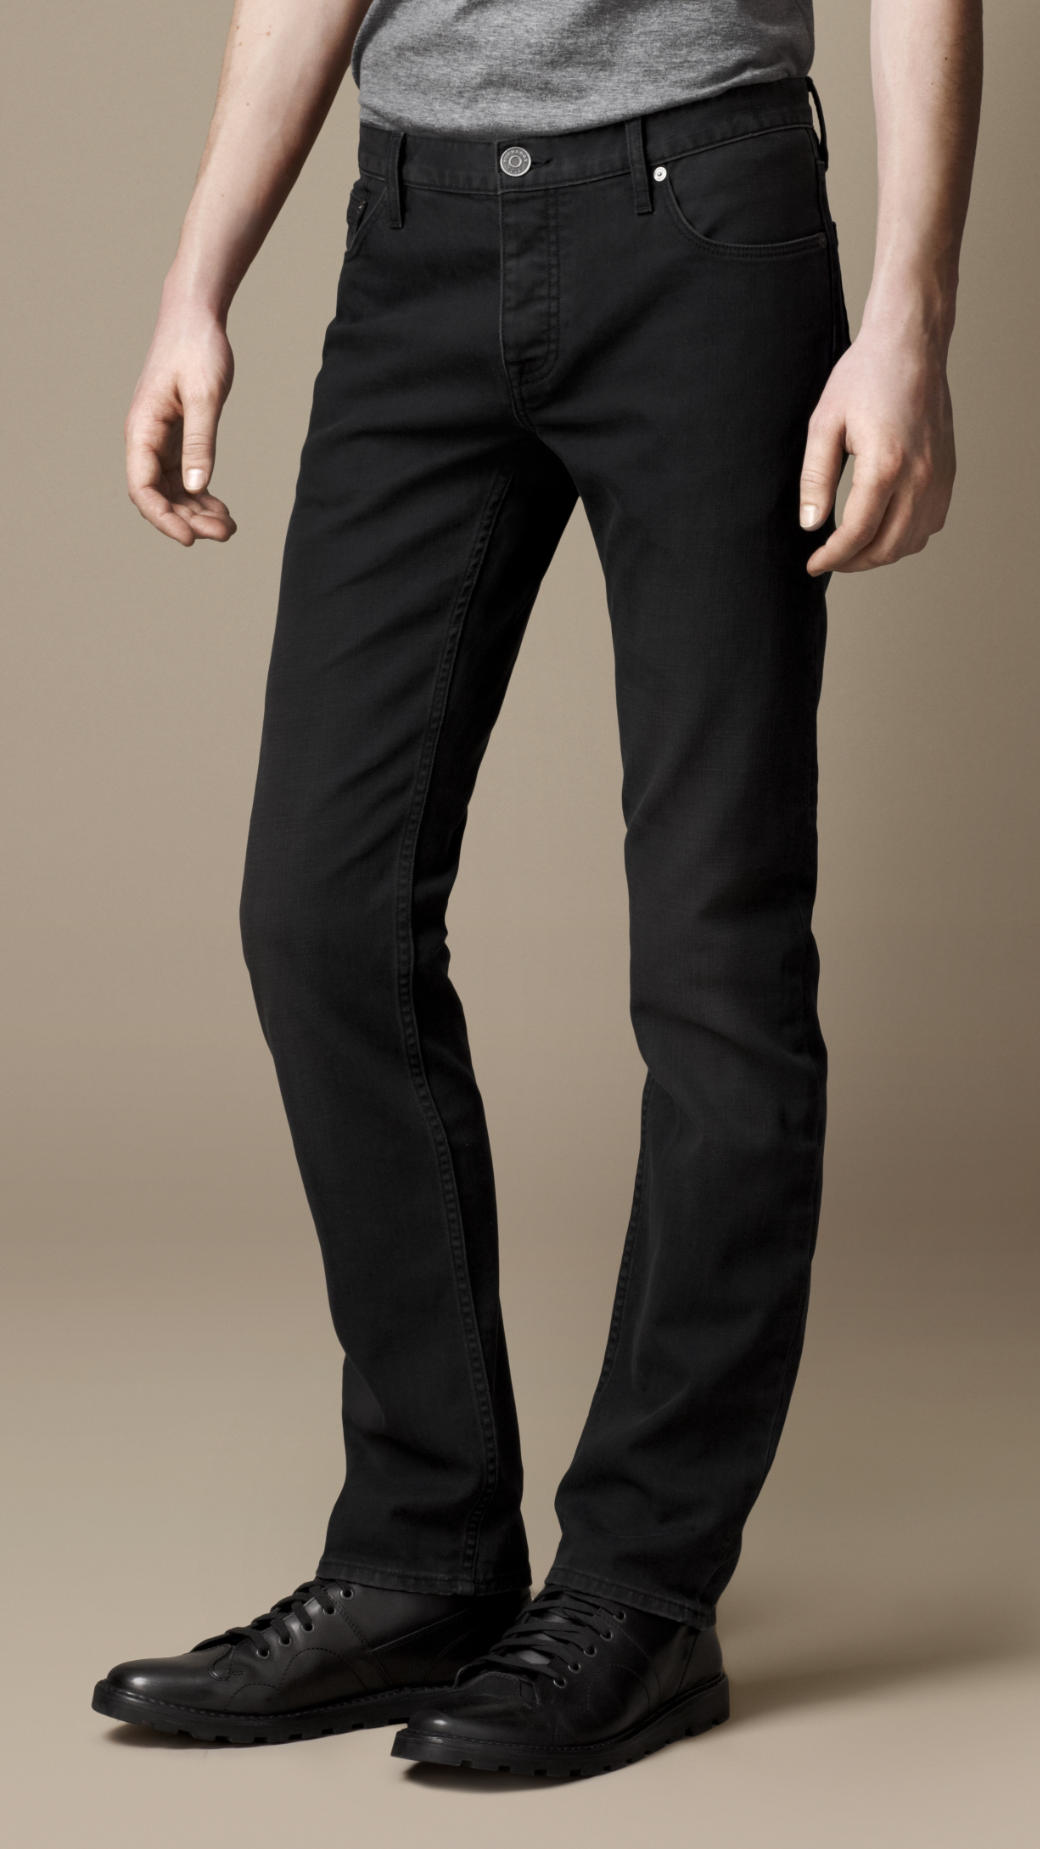 Lyst - Burberry Steadman Black Sanded Slim Fit Jeans in Black for Men